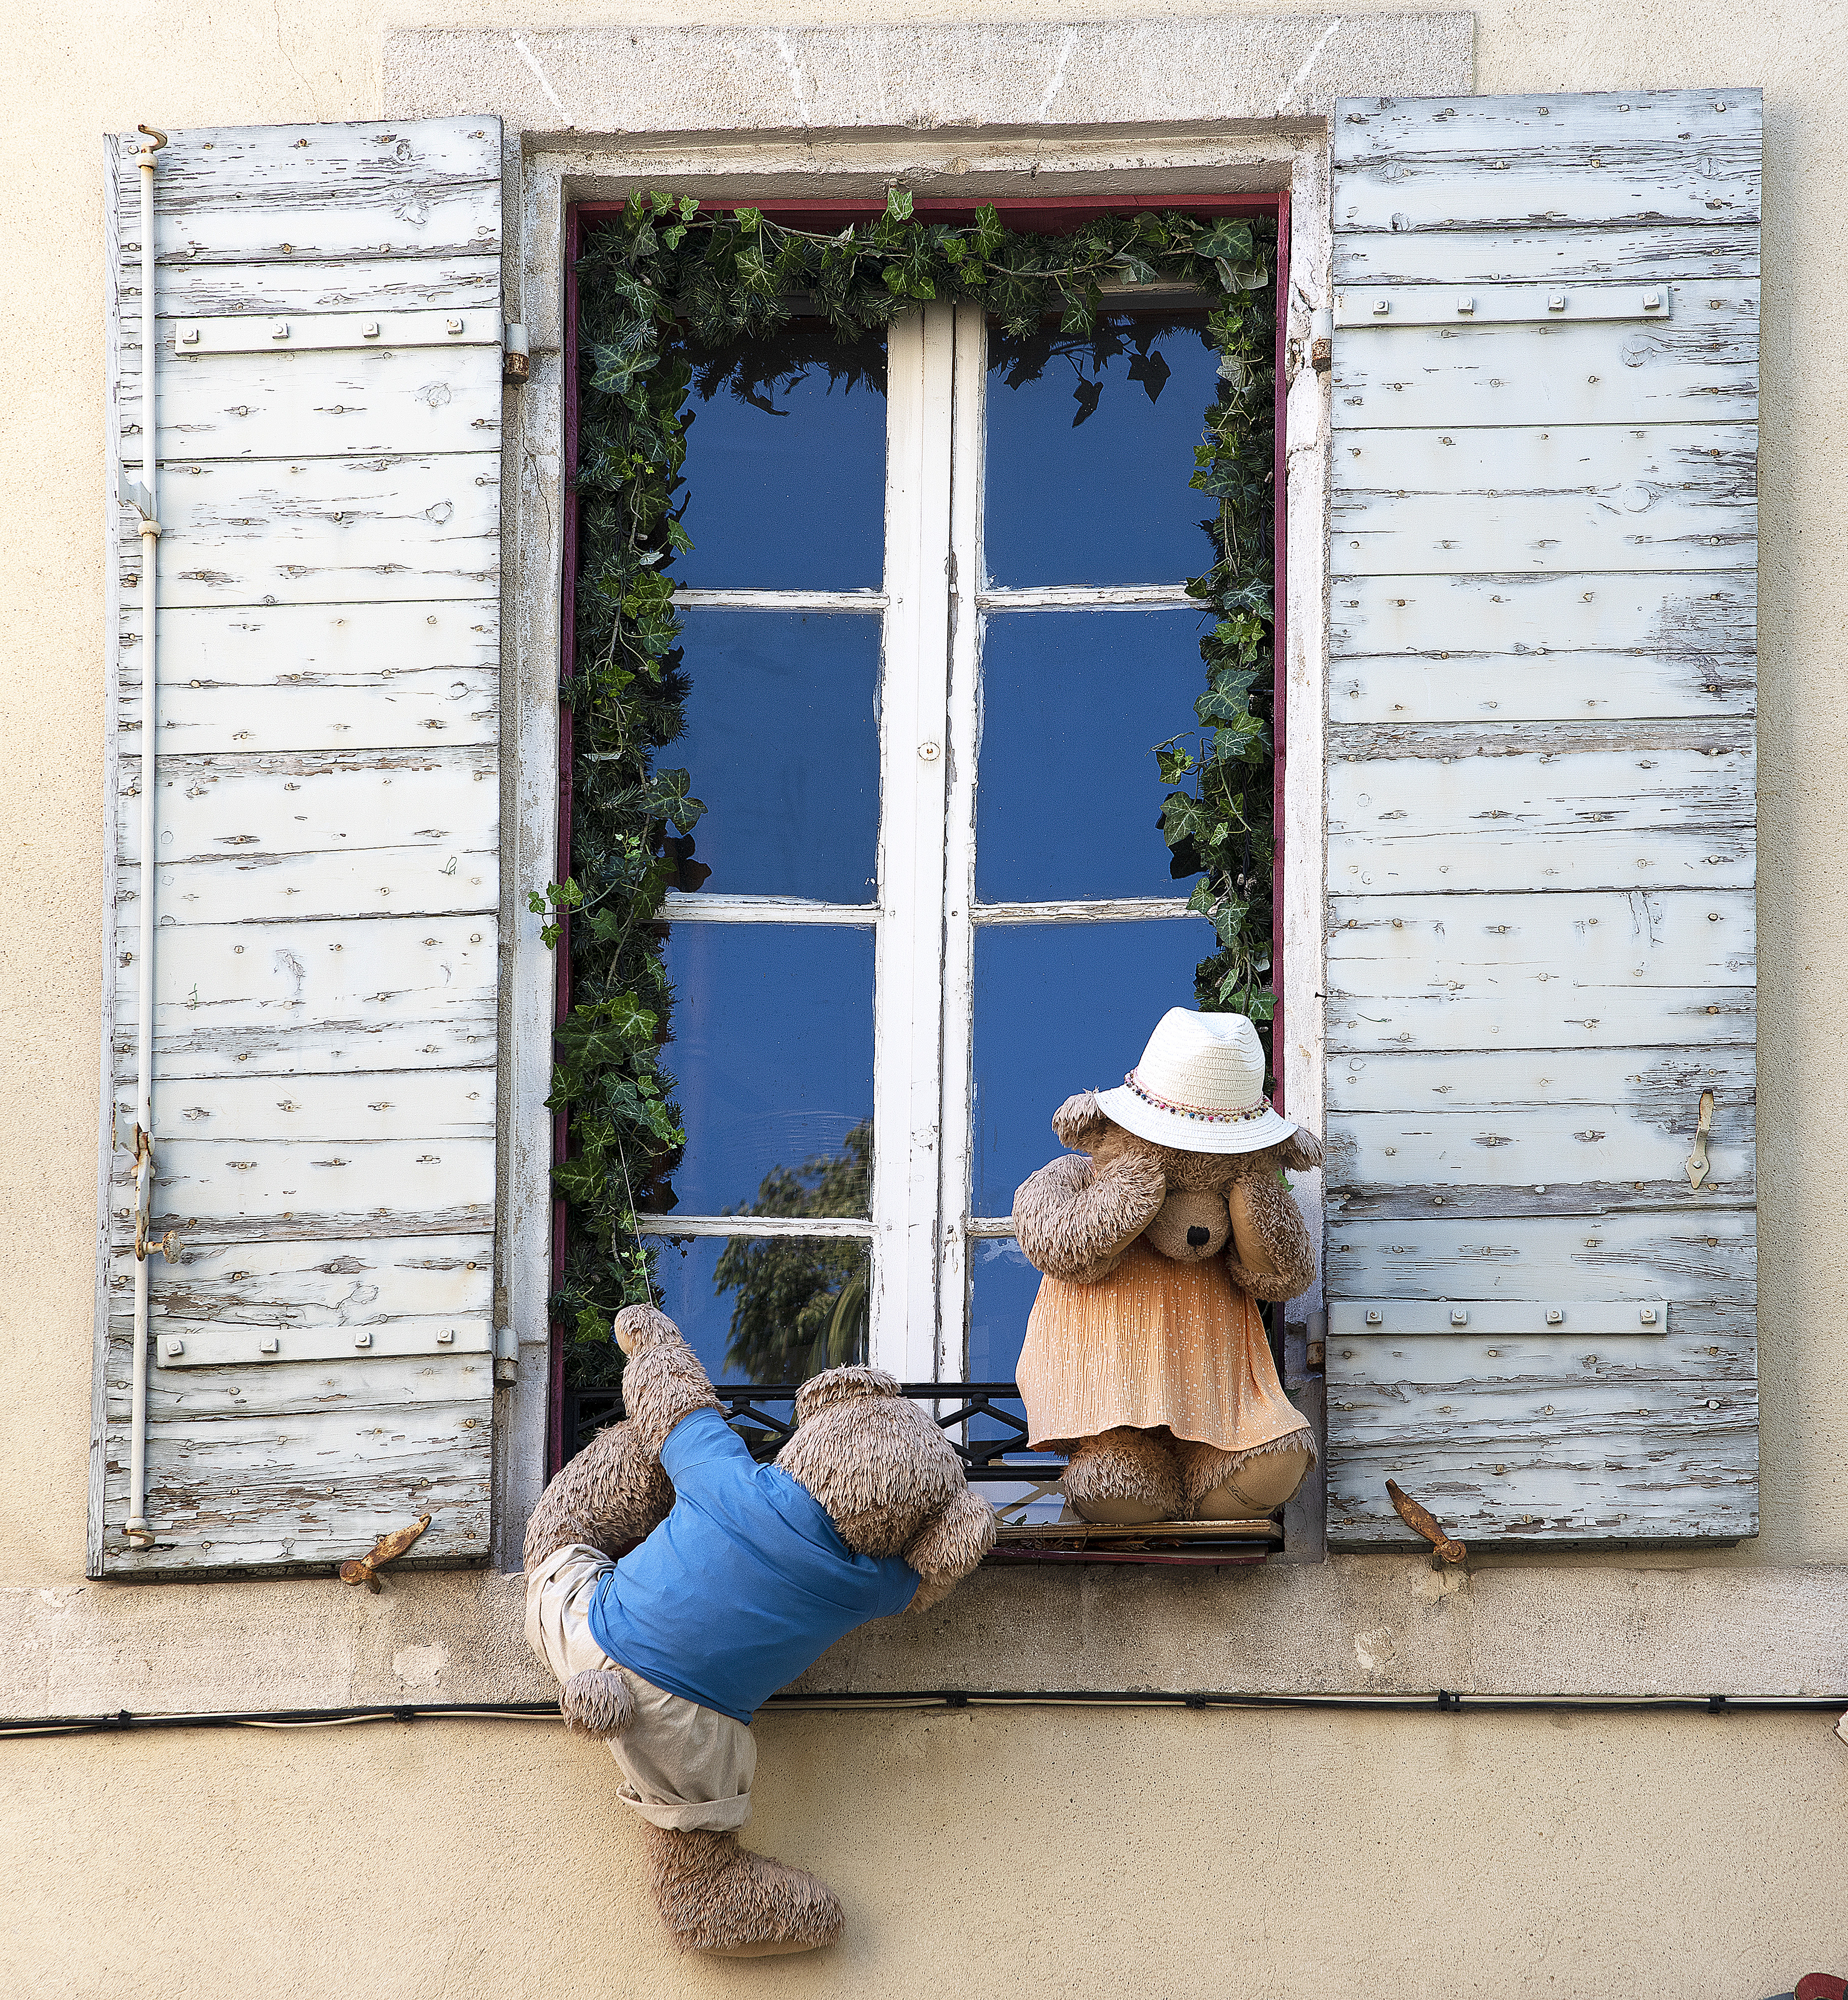 Window in St. Remy de Povence (France), 2018